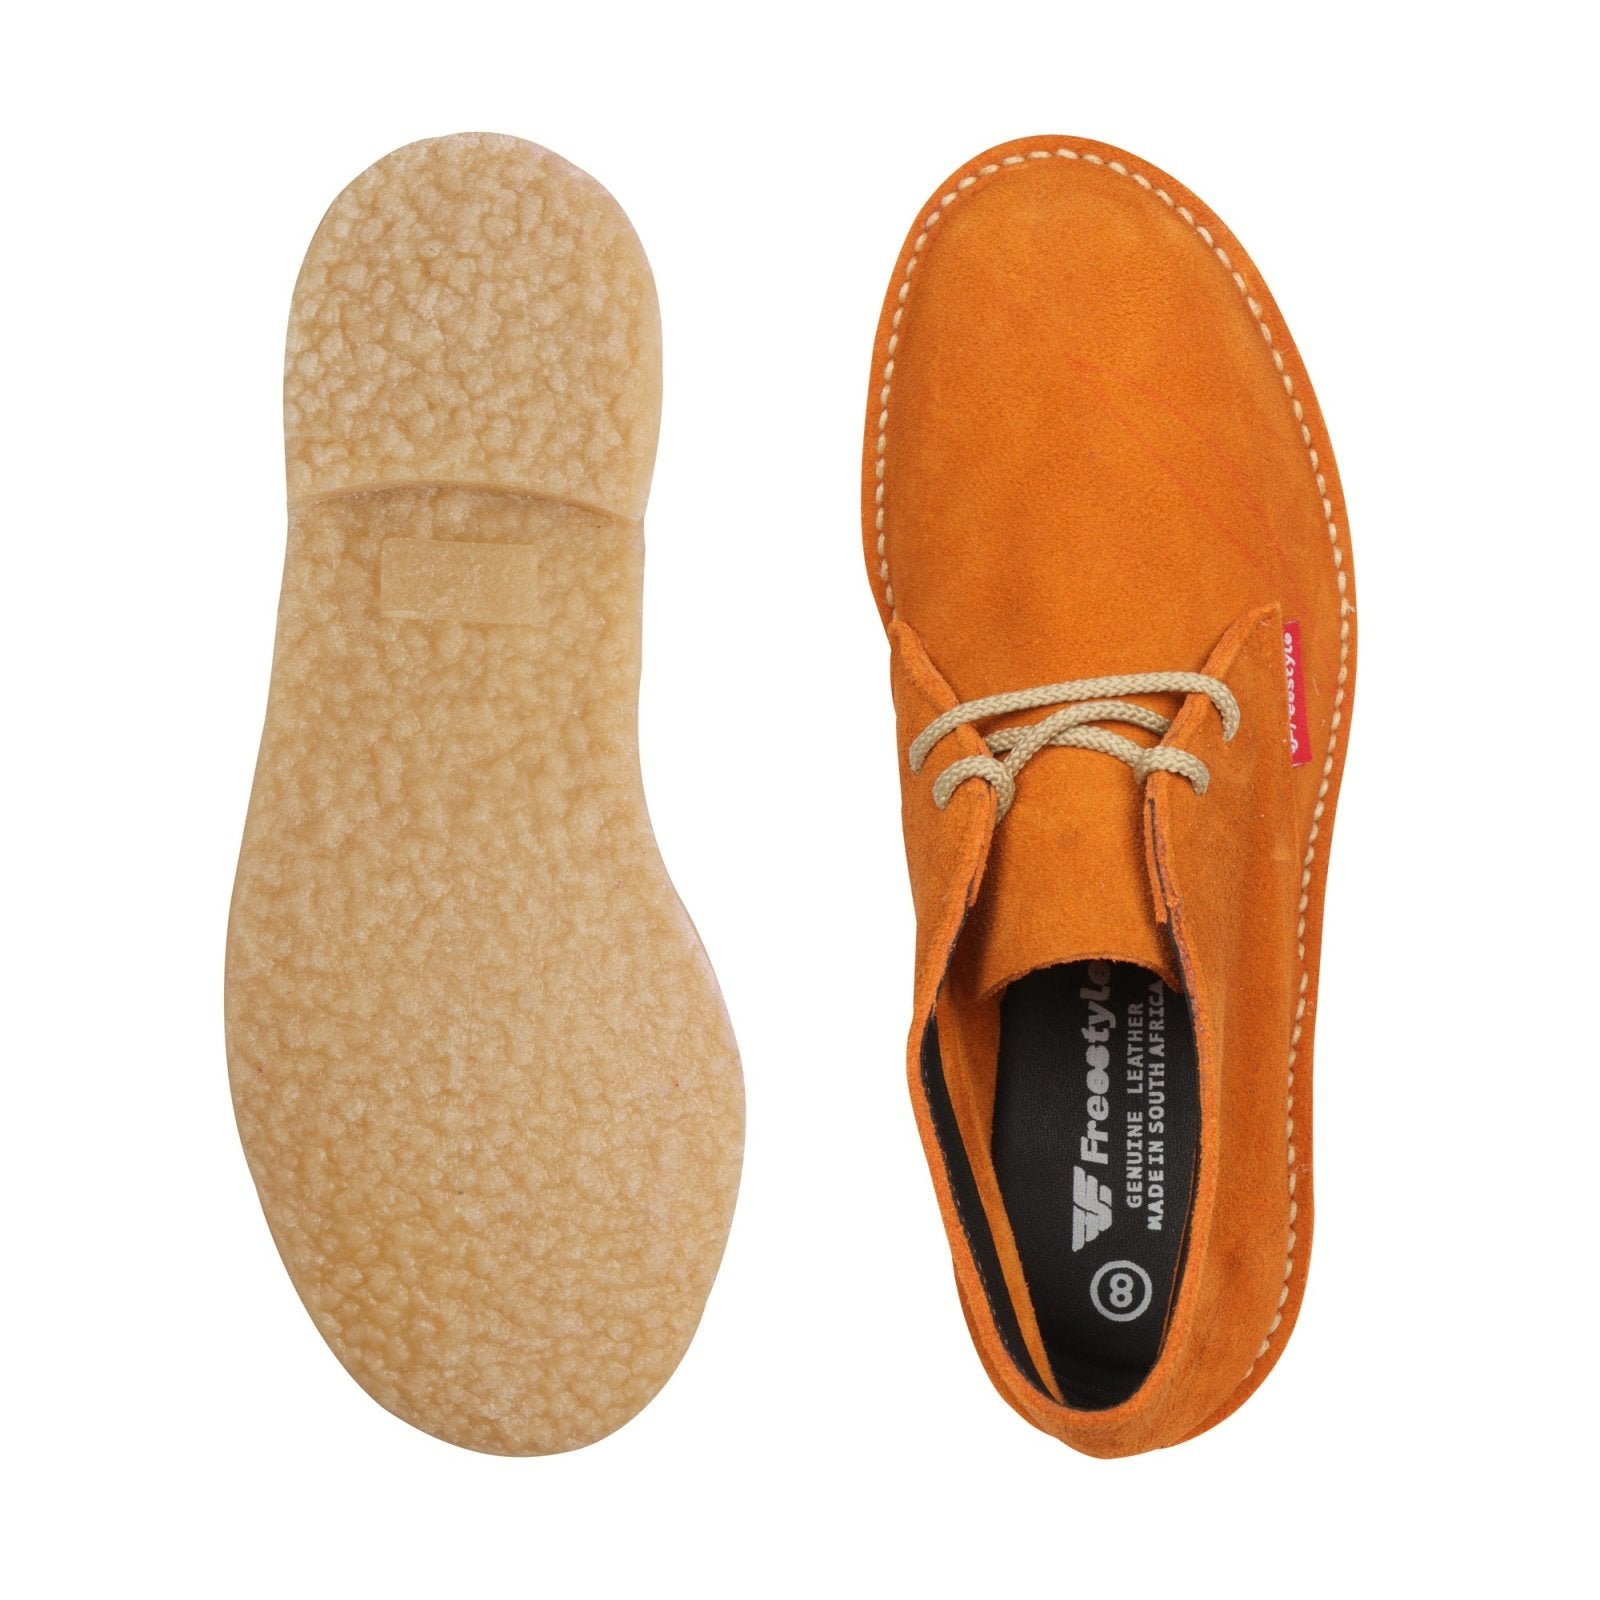 Hunter Vellie Unisex Premium Suede Veldskoen - Bright Orange - Freestyle SA Proudly local leather boots veldskoens vellies leather shoes suede veldskoens